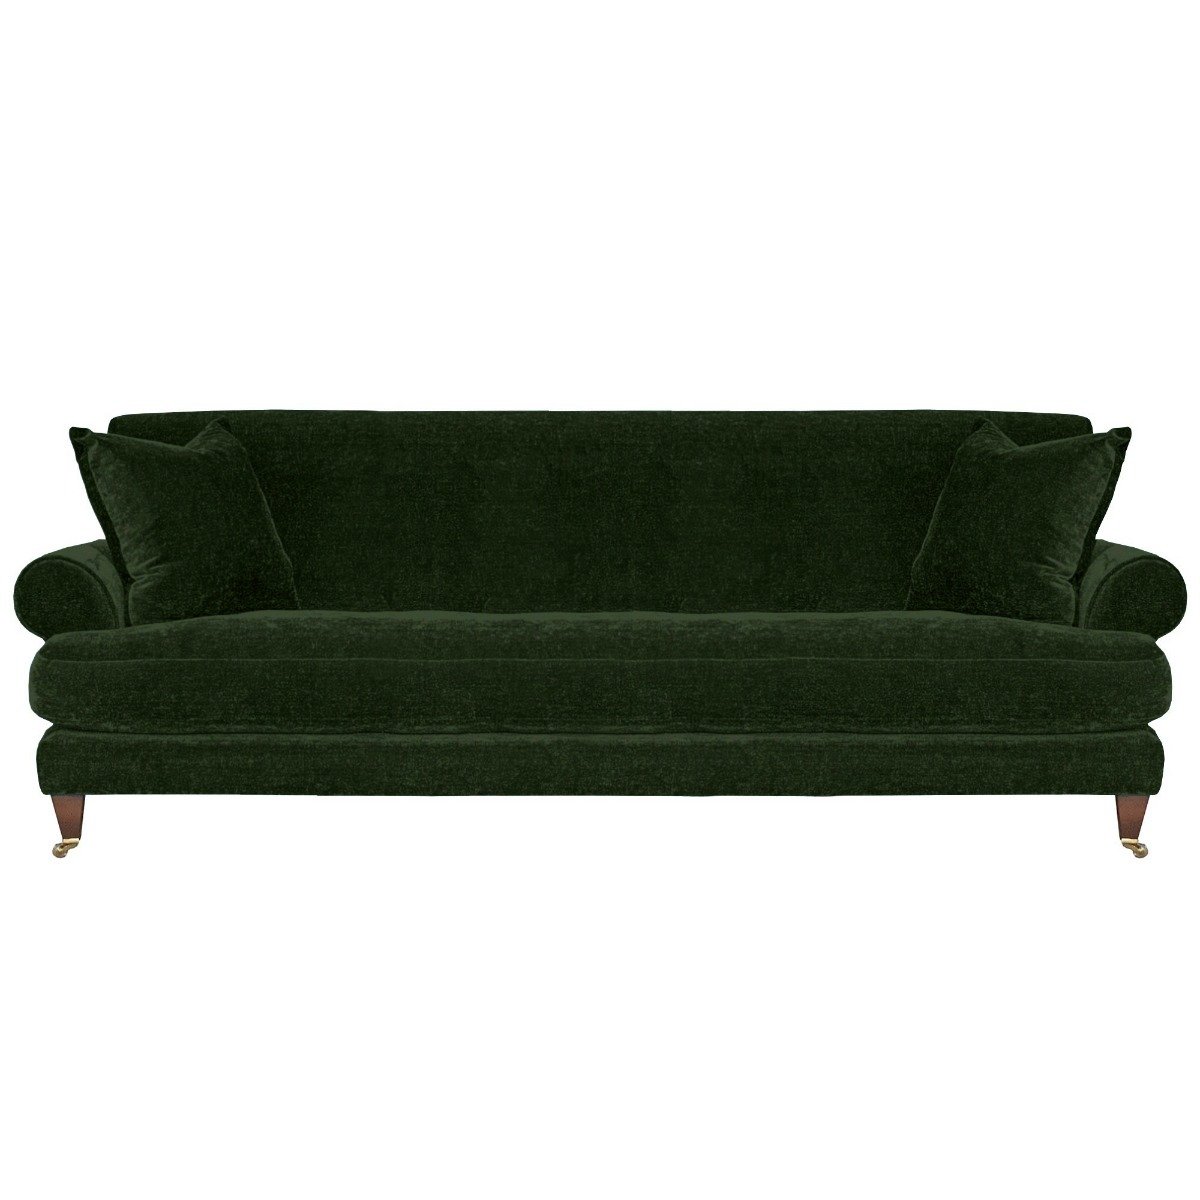 Fairlawn 4 Seater Sofa, Green Fabric | Barker & Stonehouse